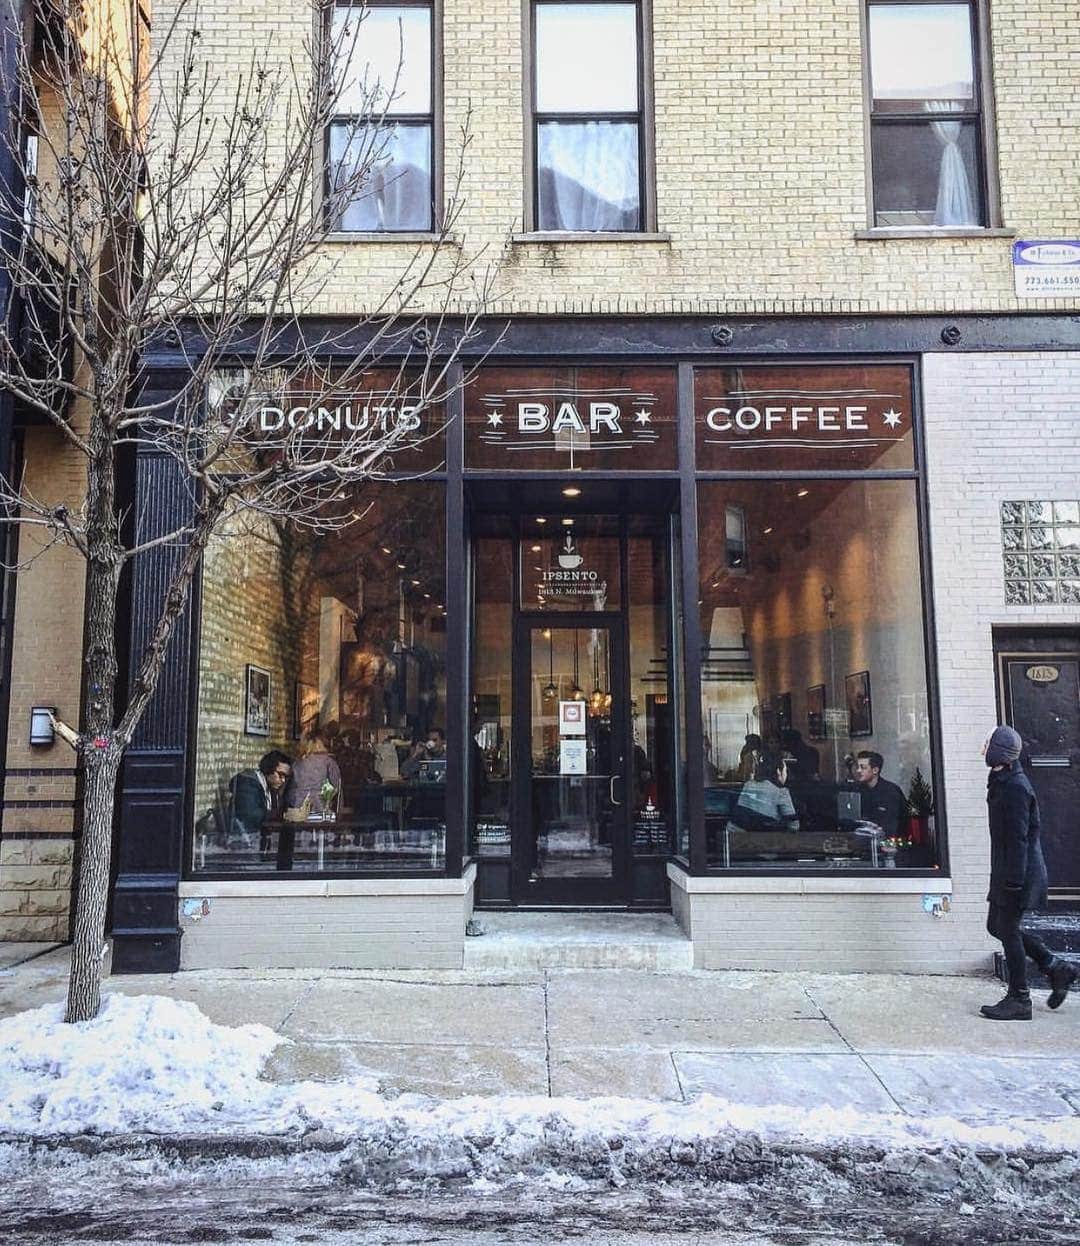 IPSENTO COFFEE: Chicago’s Ultimate Coffee Experience